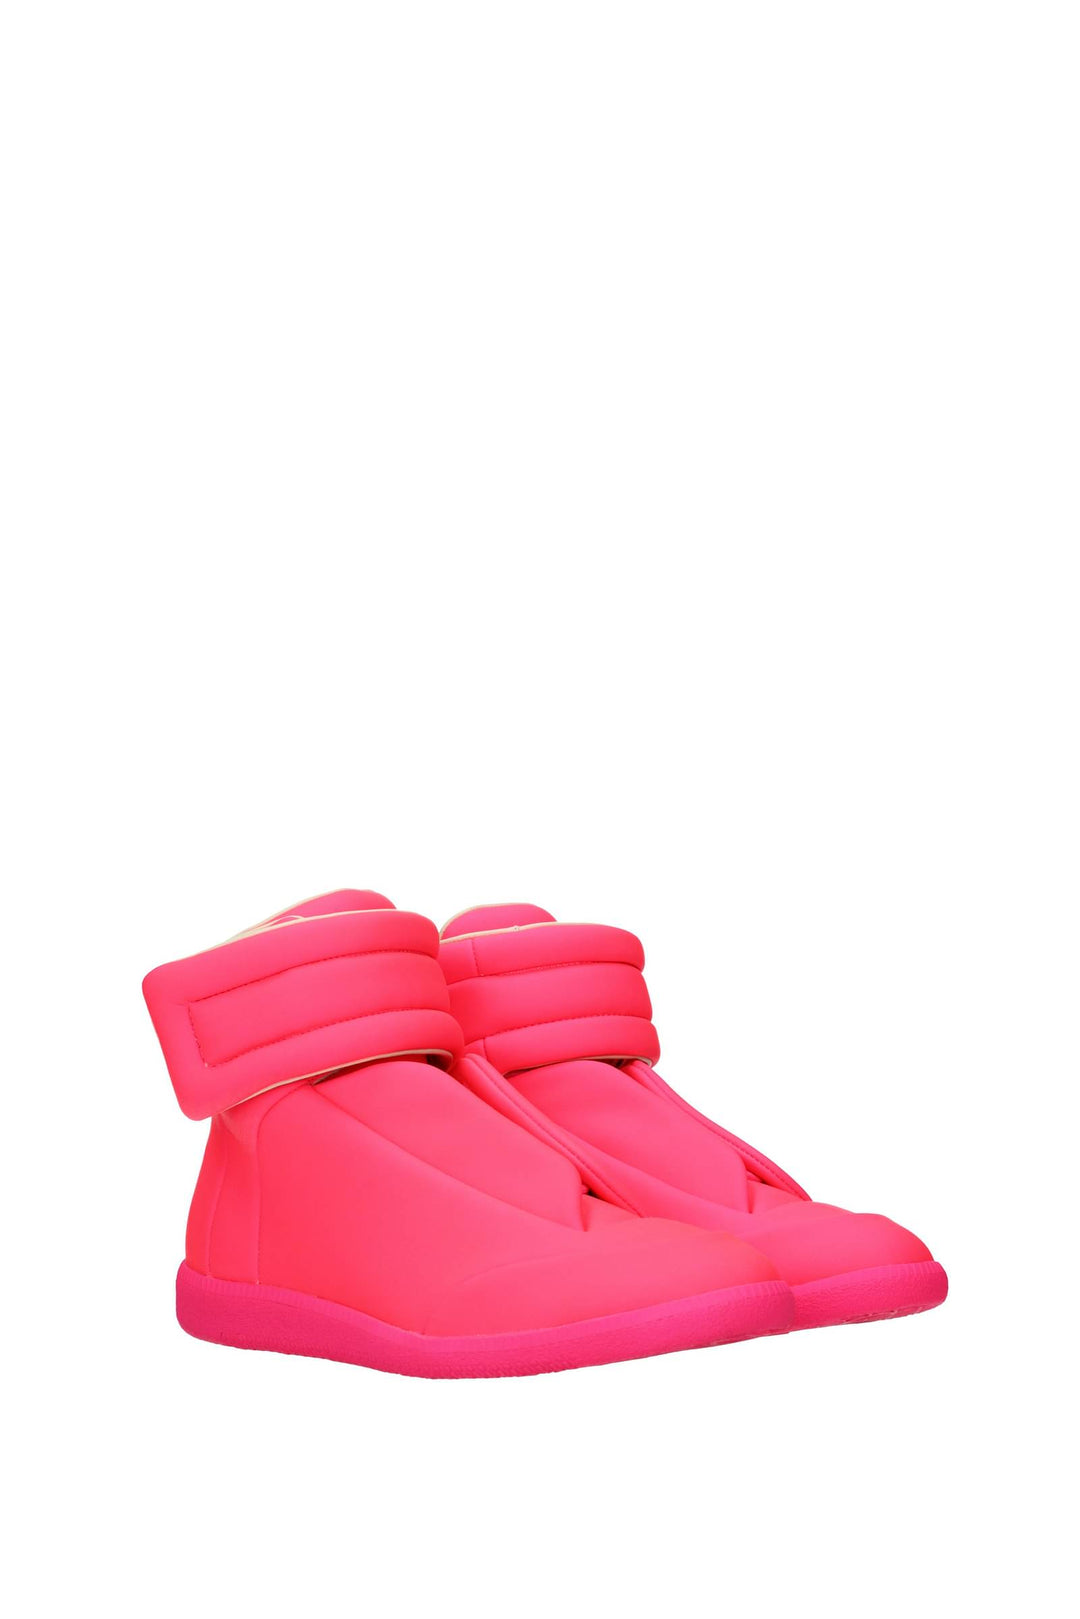 Sneakers Pelle Rosa Rosa Fluo - Maison Margiela - Uomo